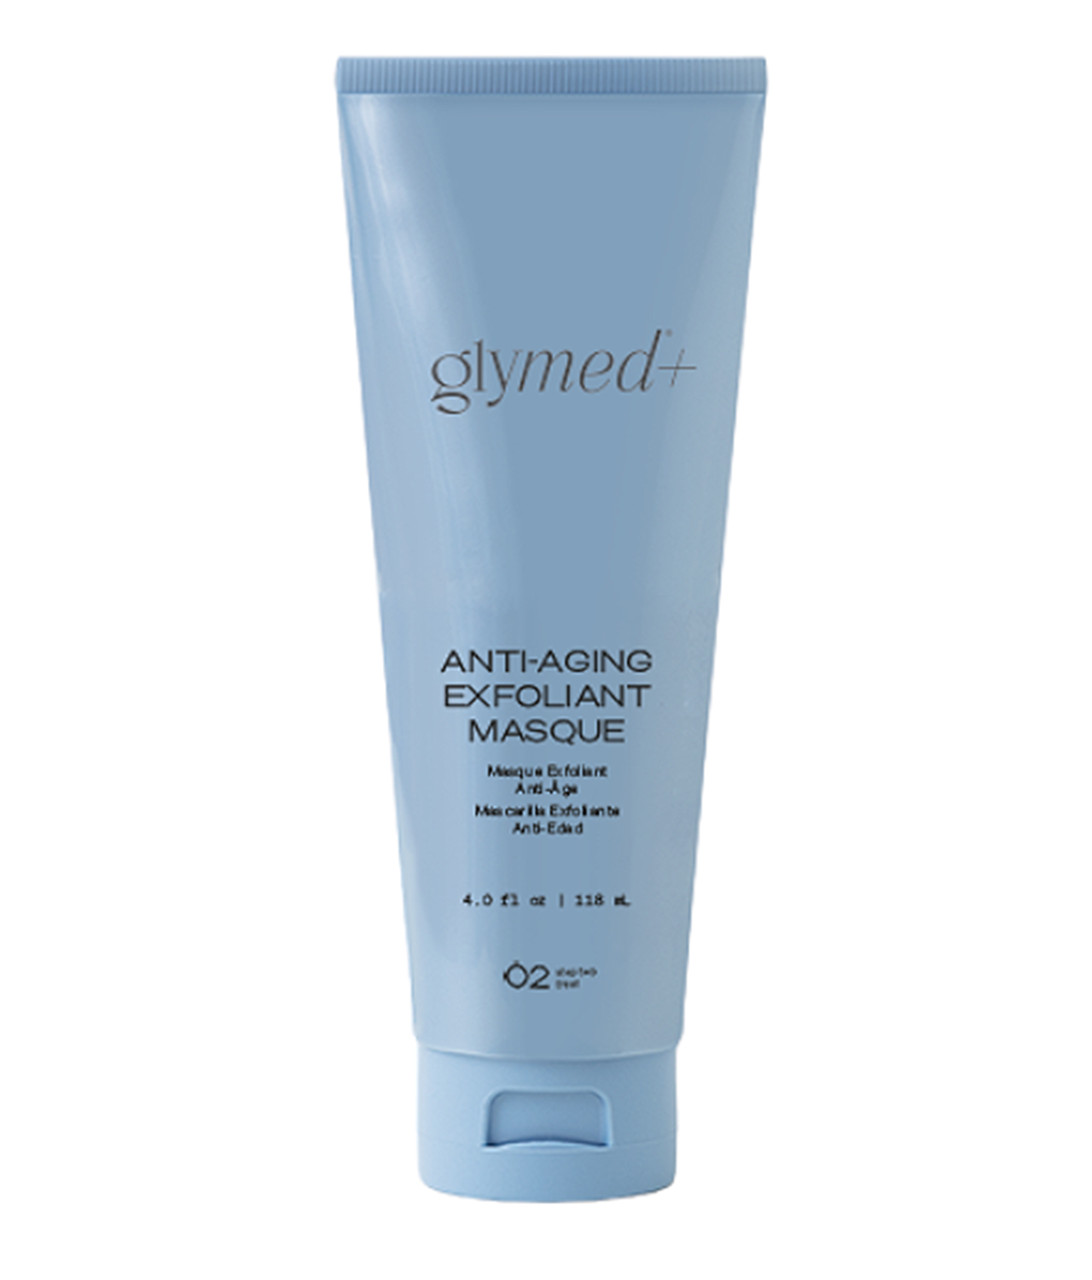 Glymed Plus Anti-Aging Exfoliant Masque - 4 oz